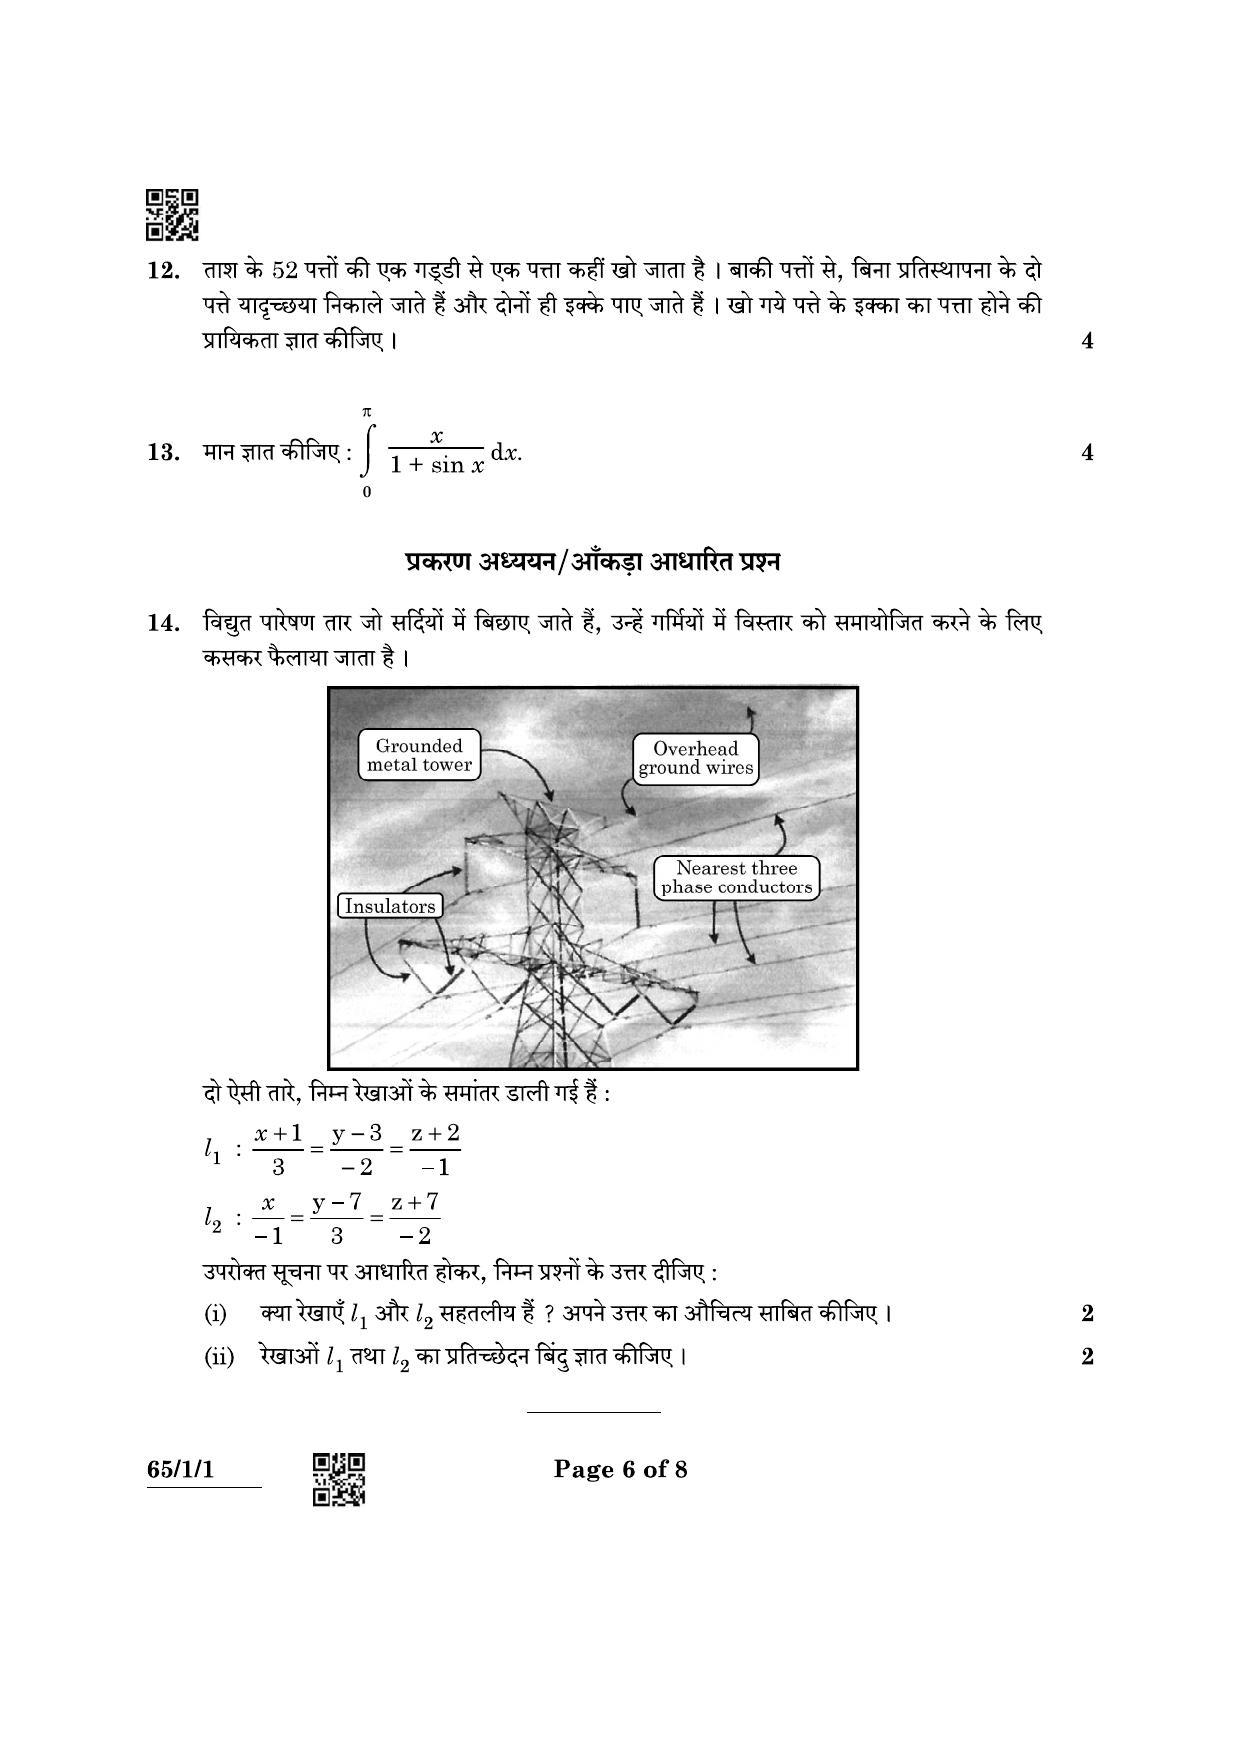 CBSE Class 12 65-1-1 Mathematcs 2022 Question Paper - Page 6